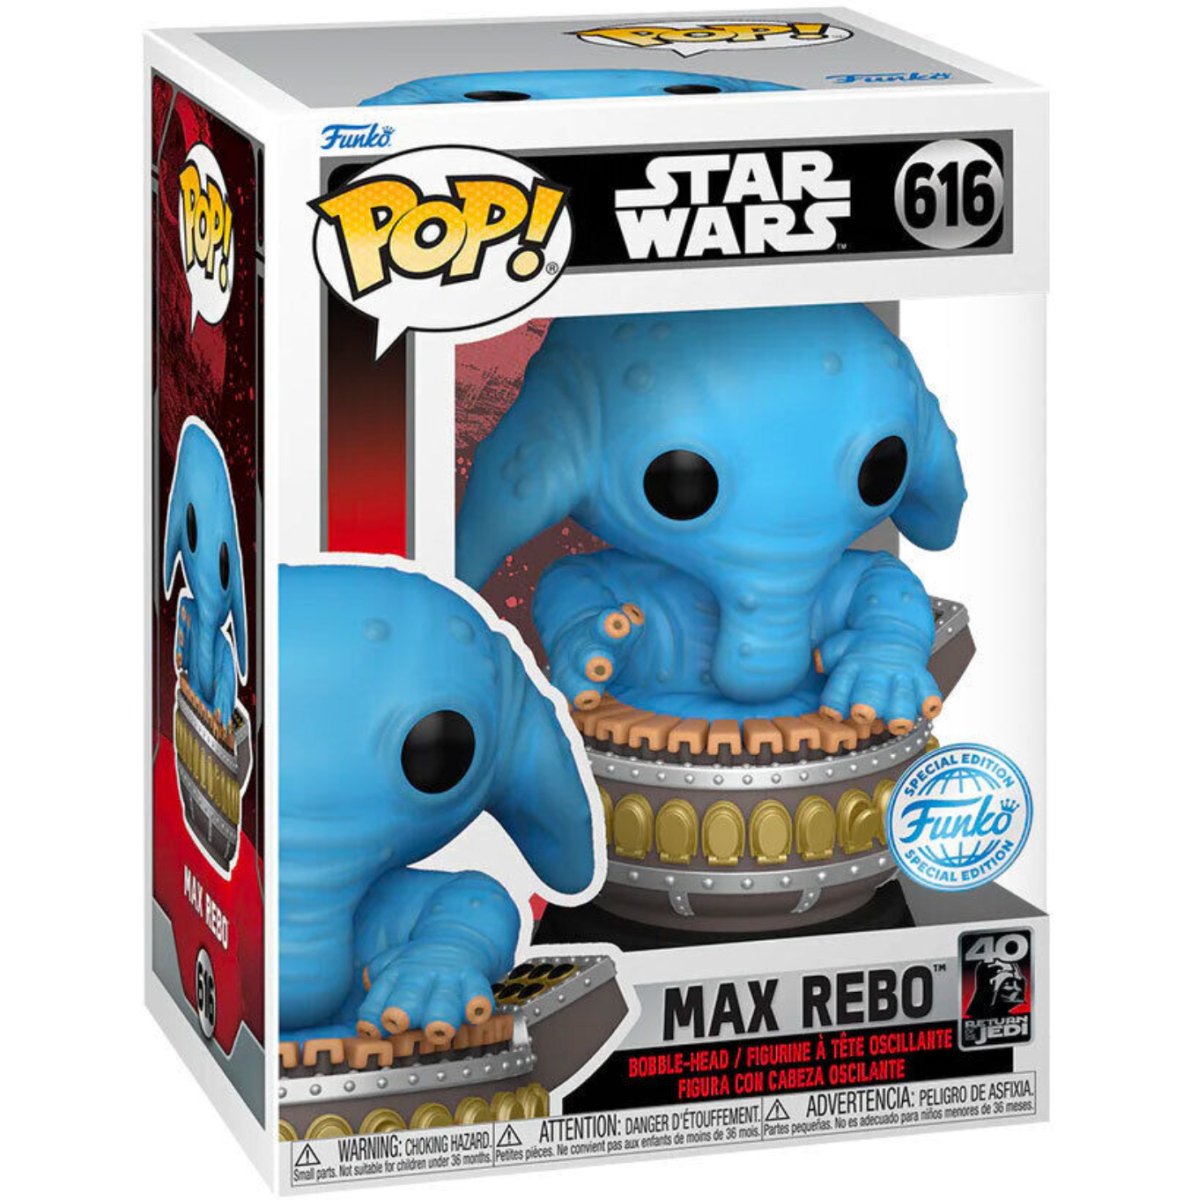 Star Wars - Max Rebo [Return of the Jedi] (Special Edition) #616 - Funko Pop! Vinyl Star Wars - Persona Toys